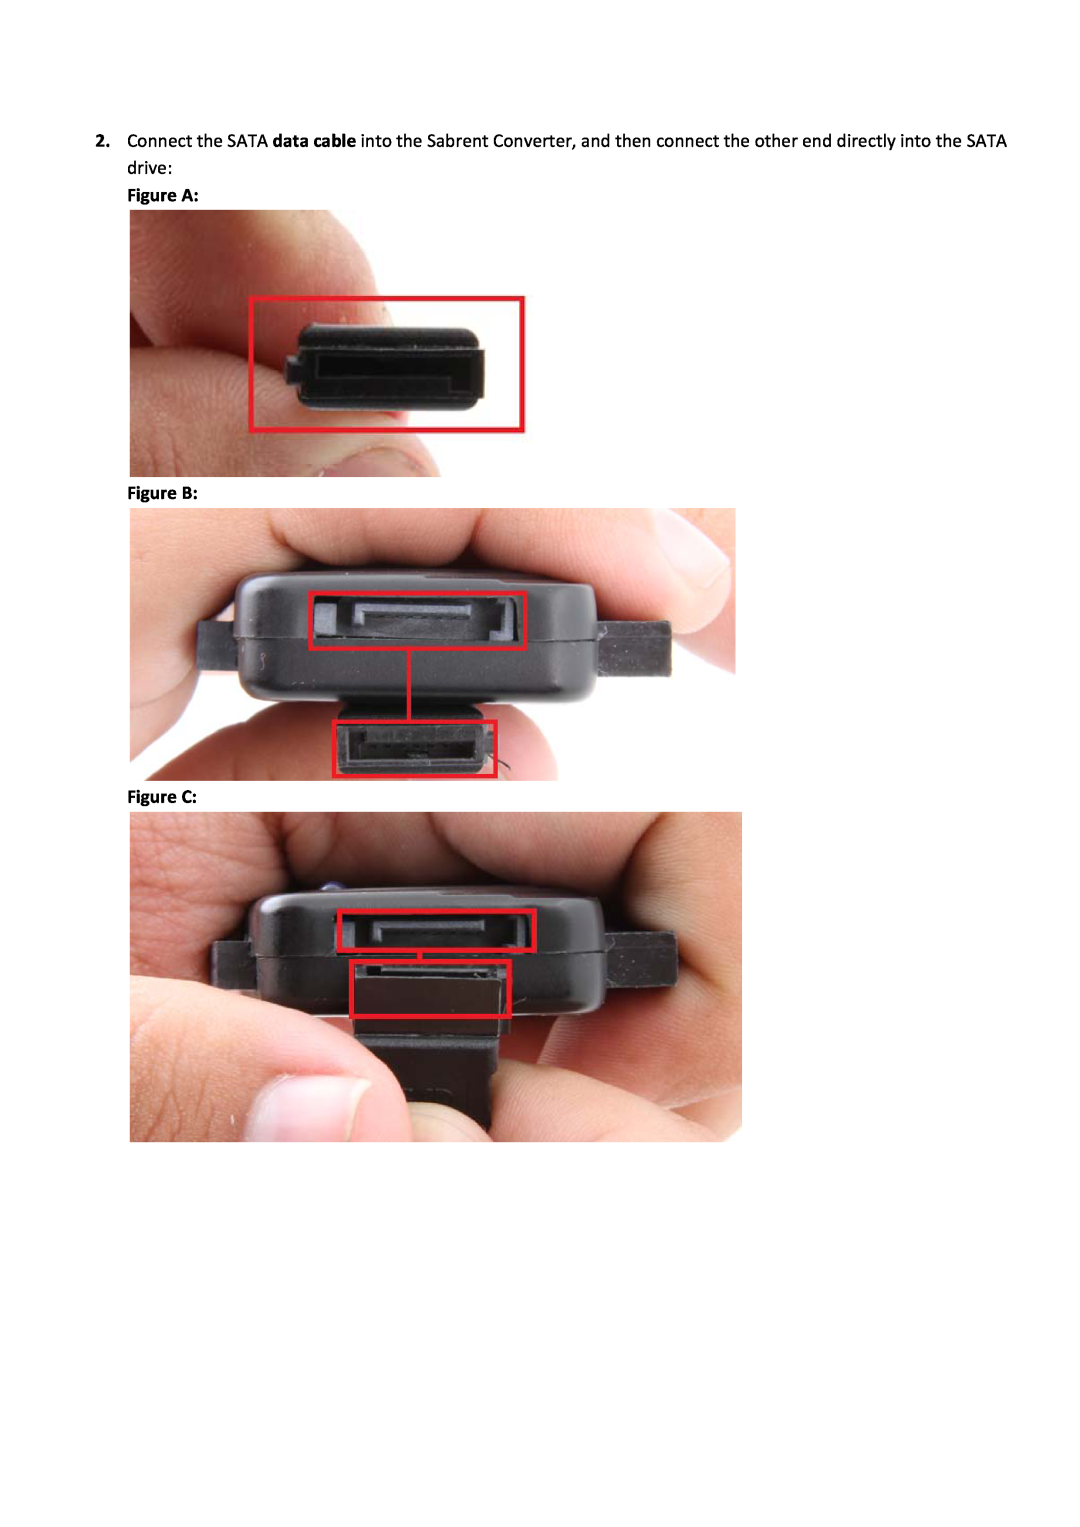 Sabrent USBDSC5 manual drive, Figure A Figure B Figure C 